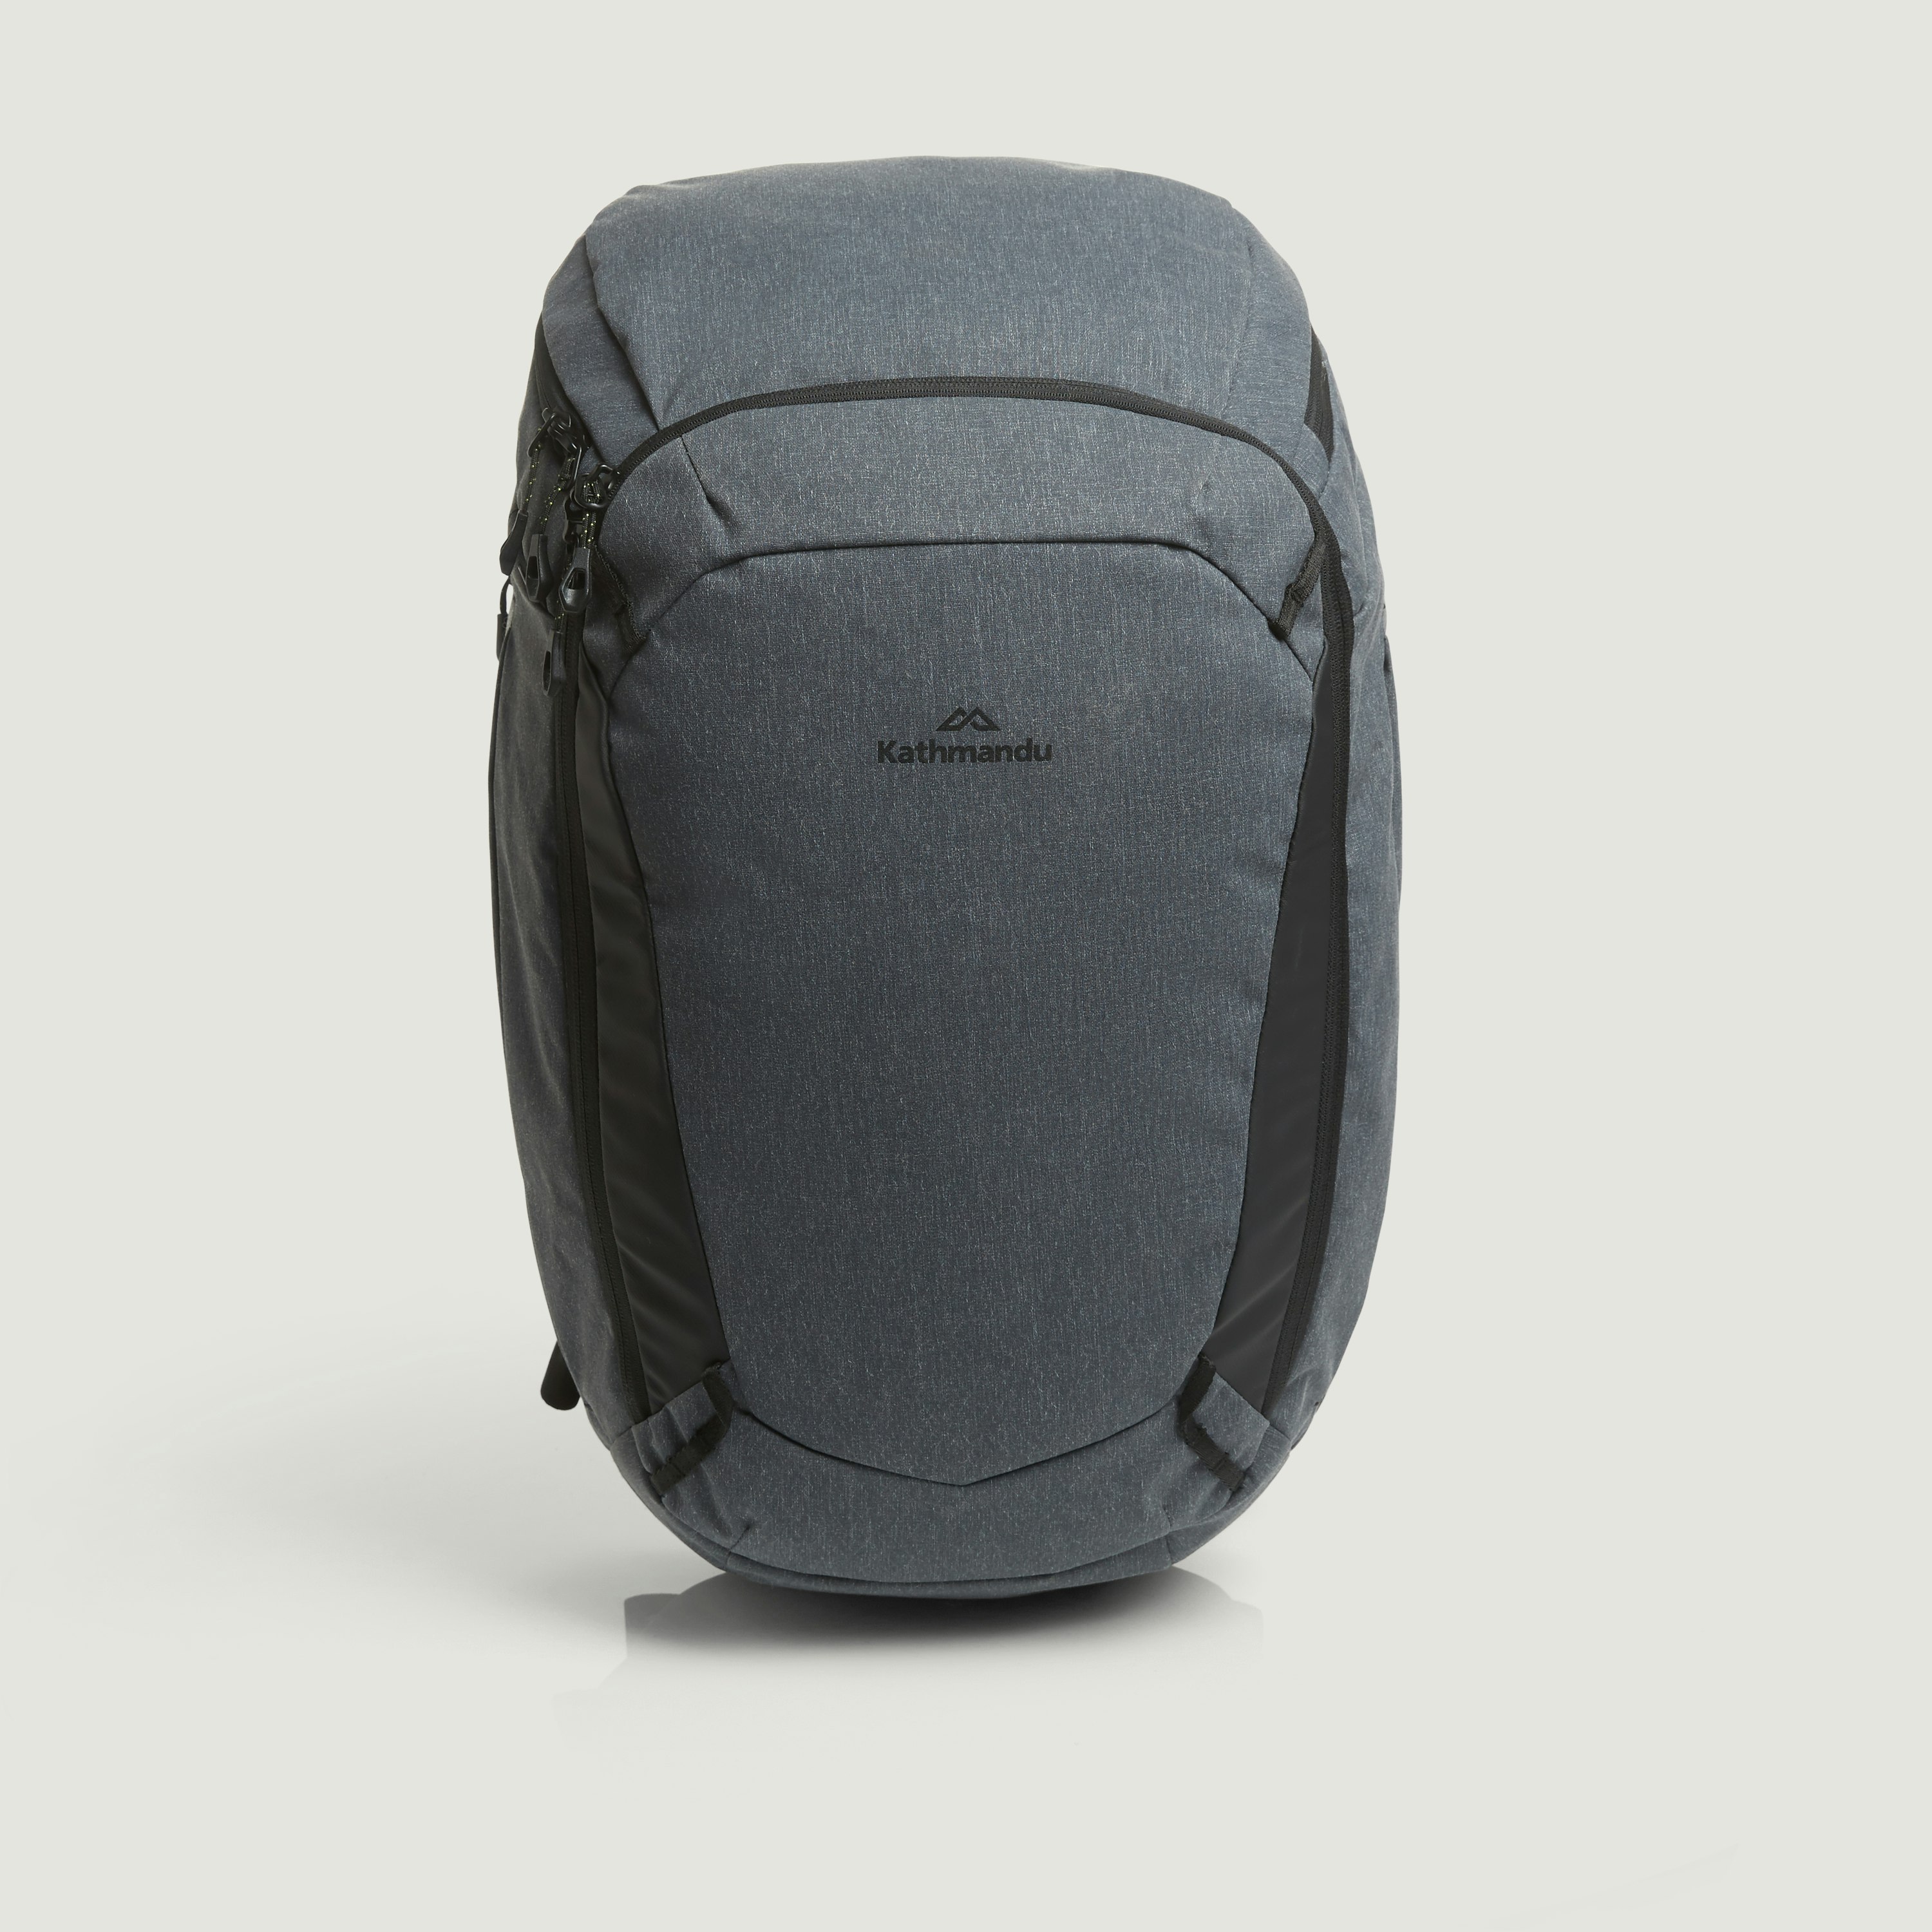 Bags & Backpacks | Outdoor Gear & Equipment | Kathmandu UK